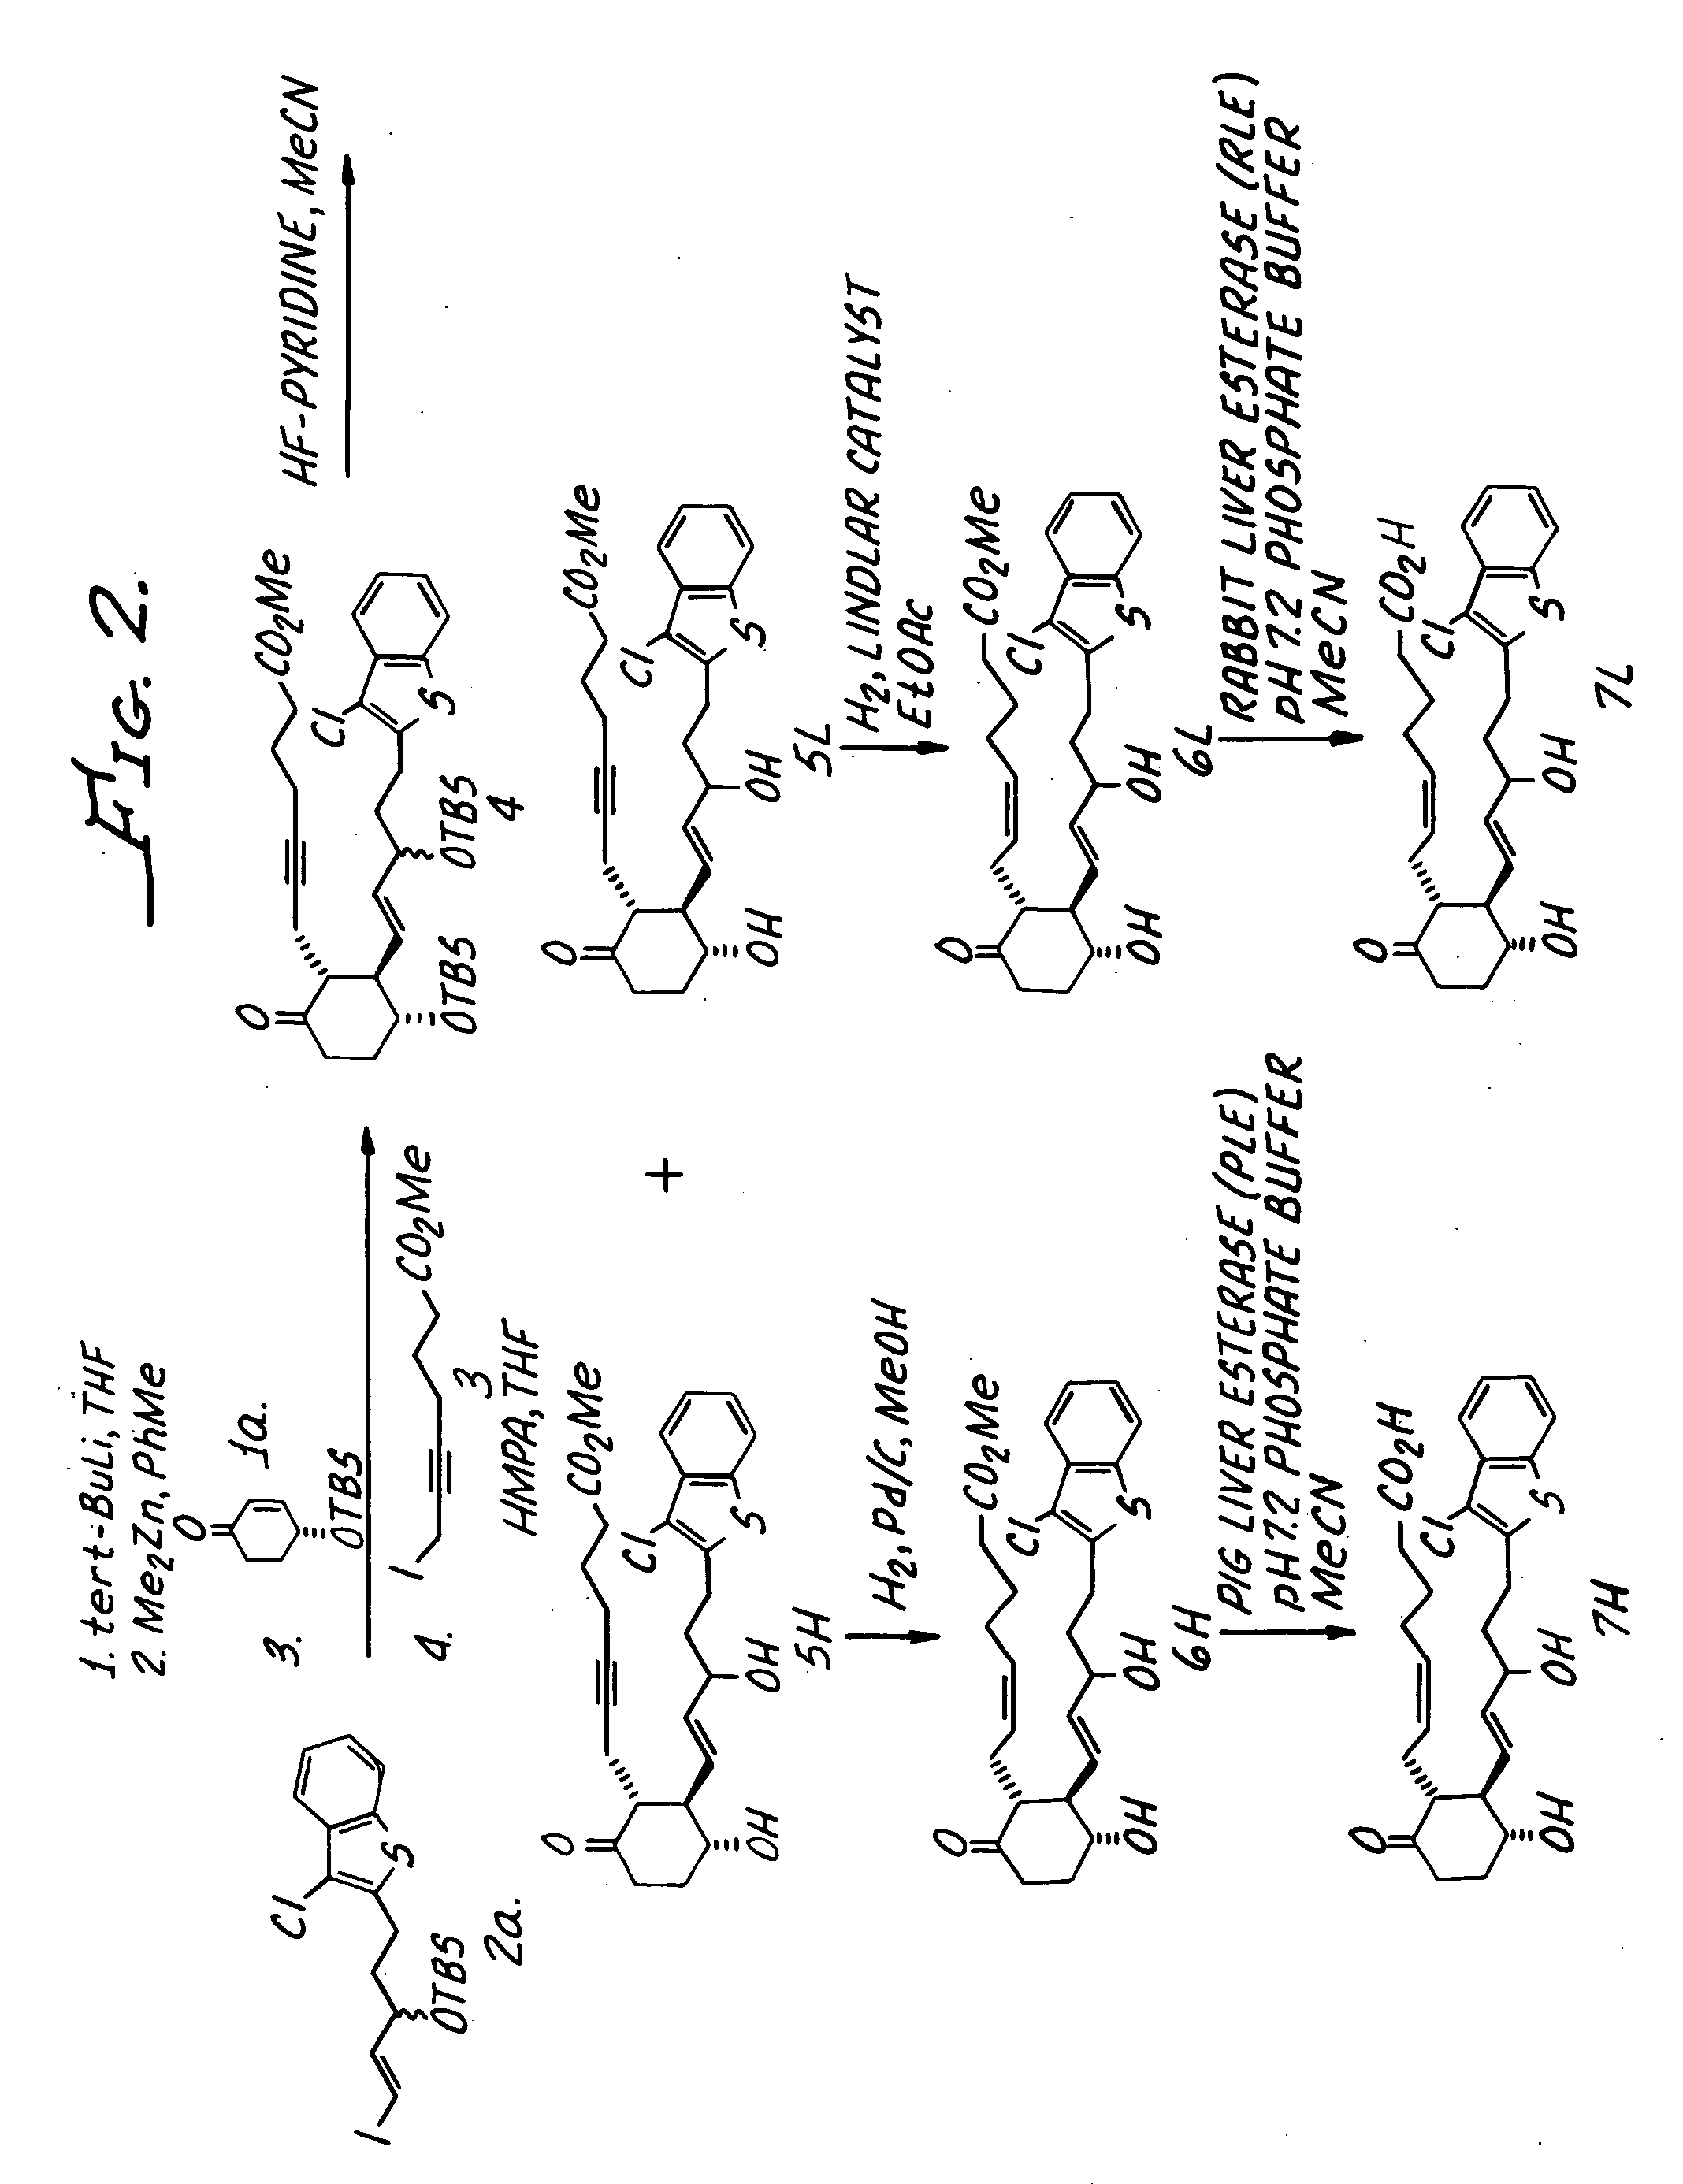 Cyclohexyl prostaglandin analogs as EP4-receptor agonists